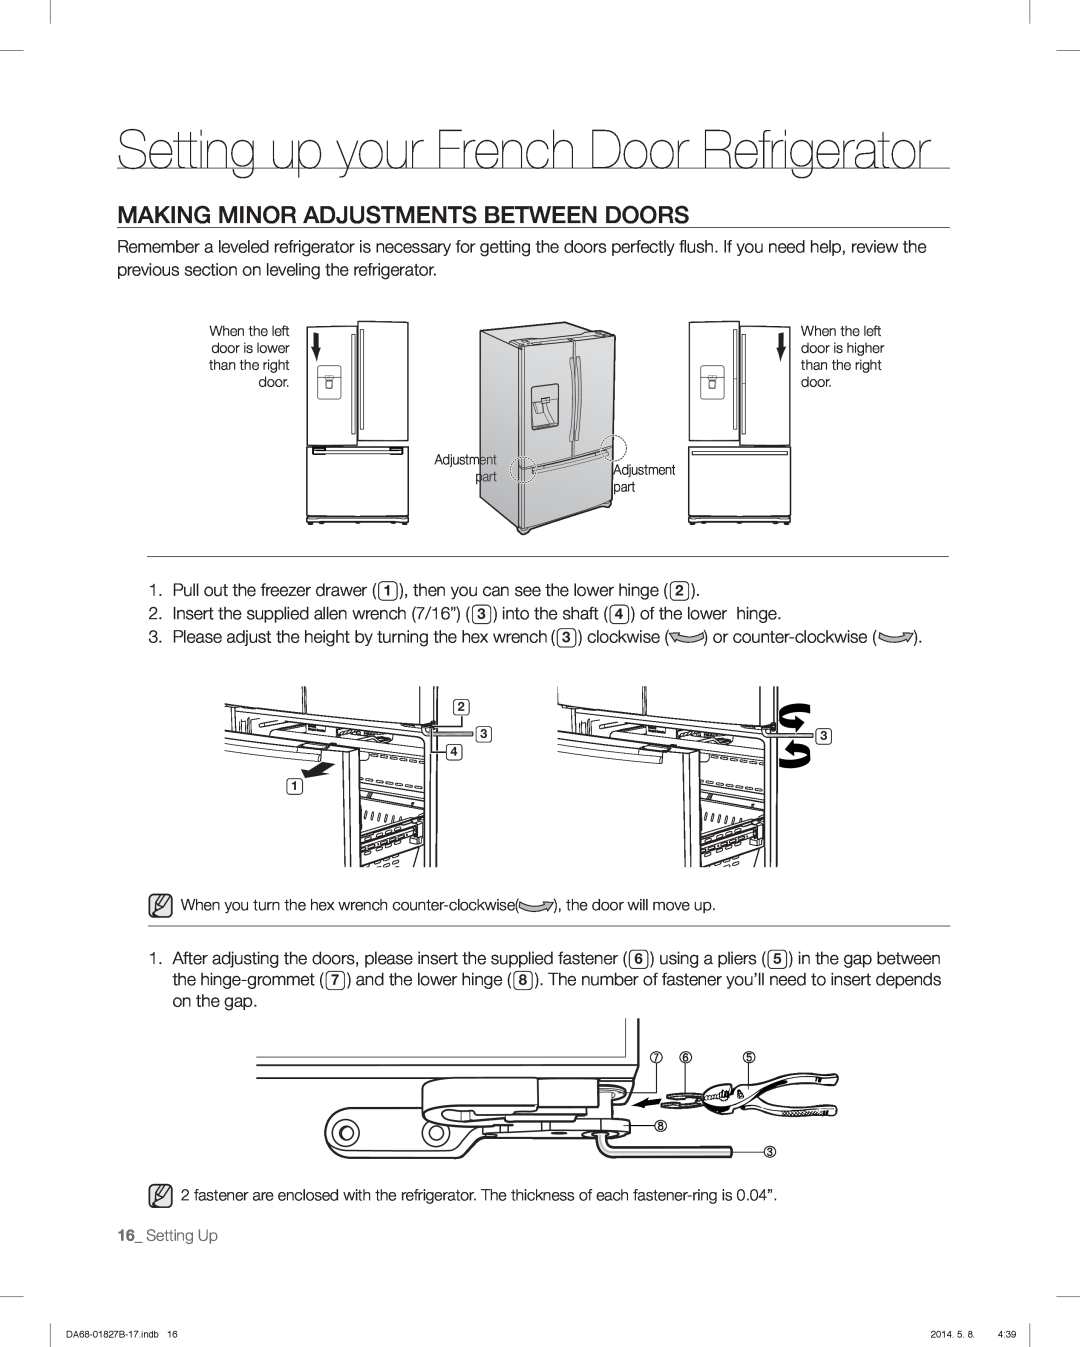 Samsung RFG237AAWP, RFG237AARS, RFG237AABP Making Minor Adjustments Between Doors, Setting up your French Door Refrigerator 